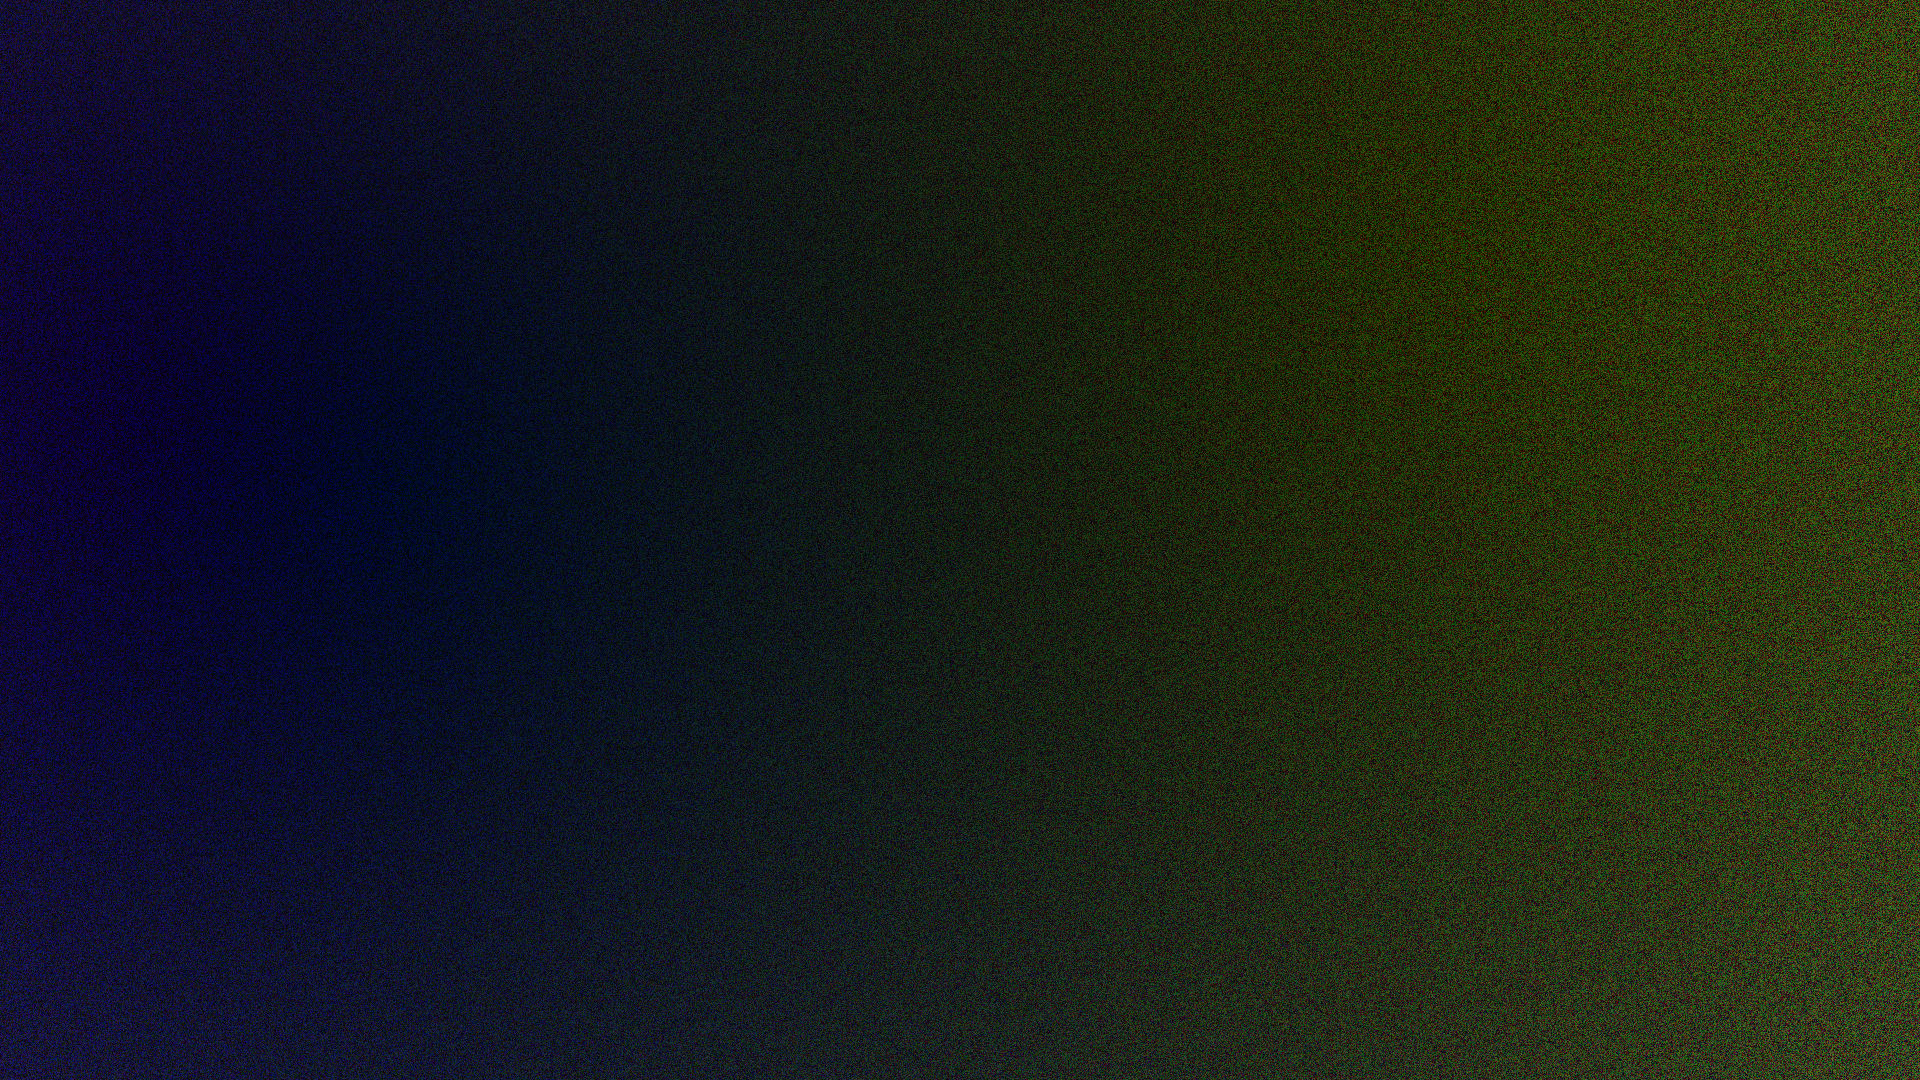 General 1920x1080 simple background dark pixels minimalism colorful